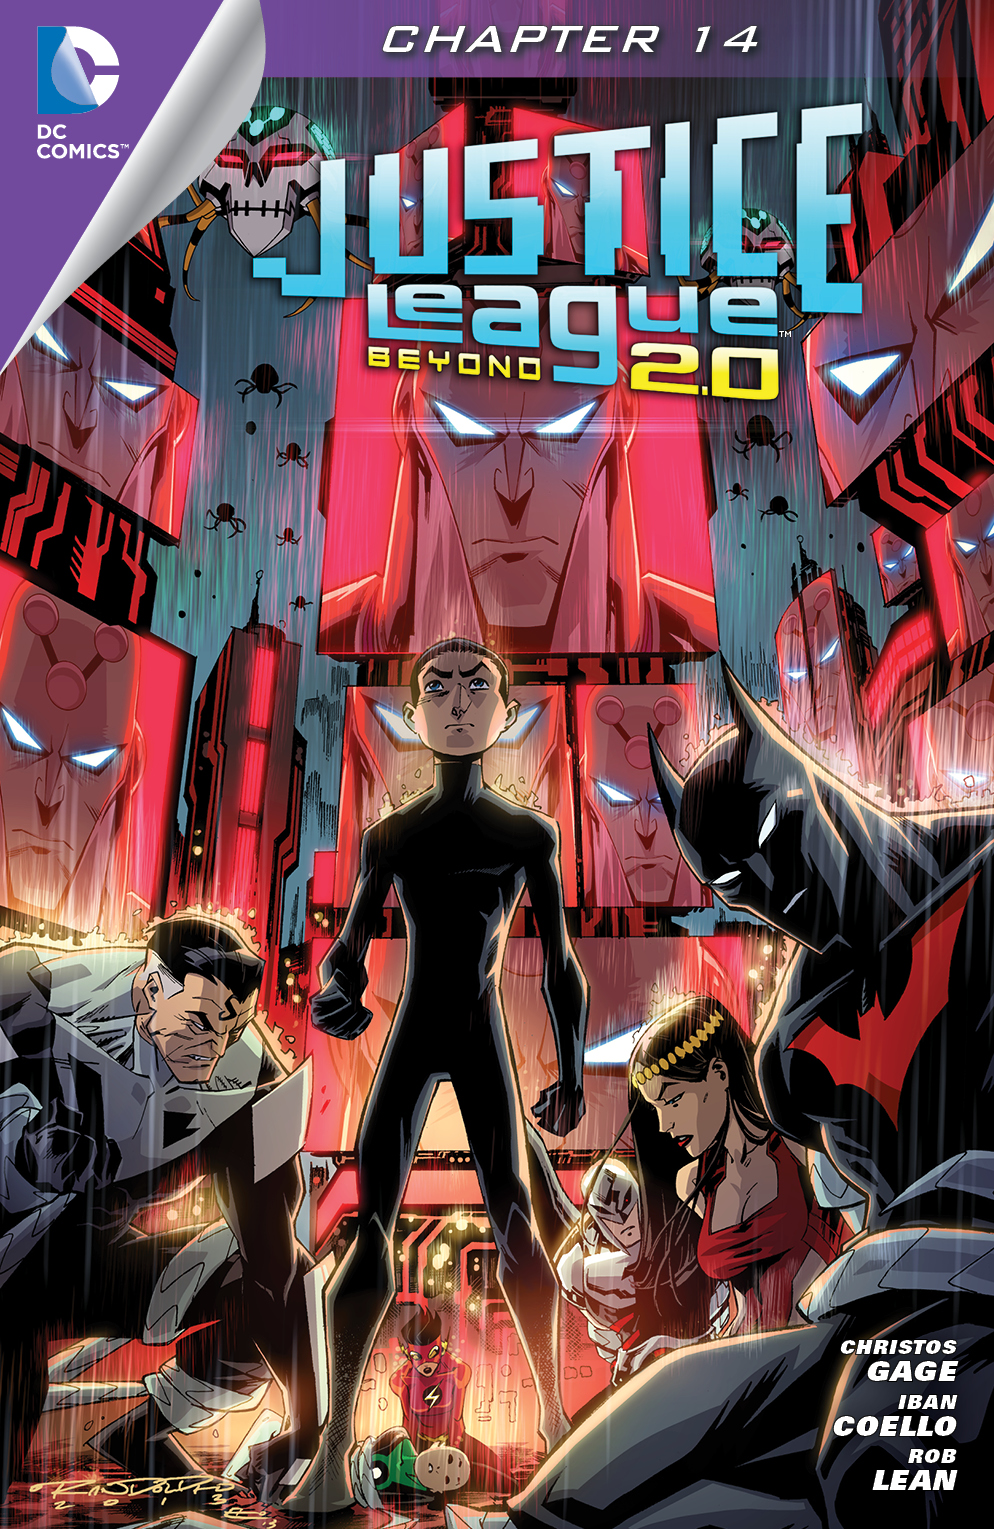 Justice League Beyond 2.0 #14 preview images